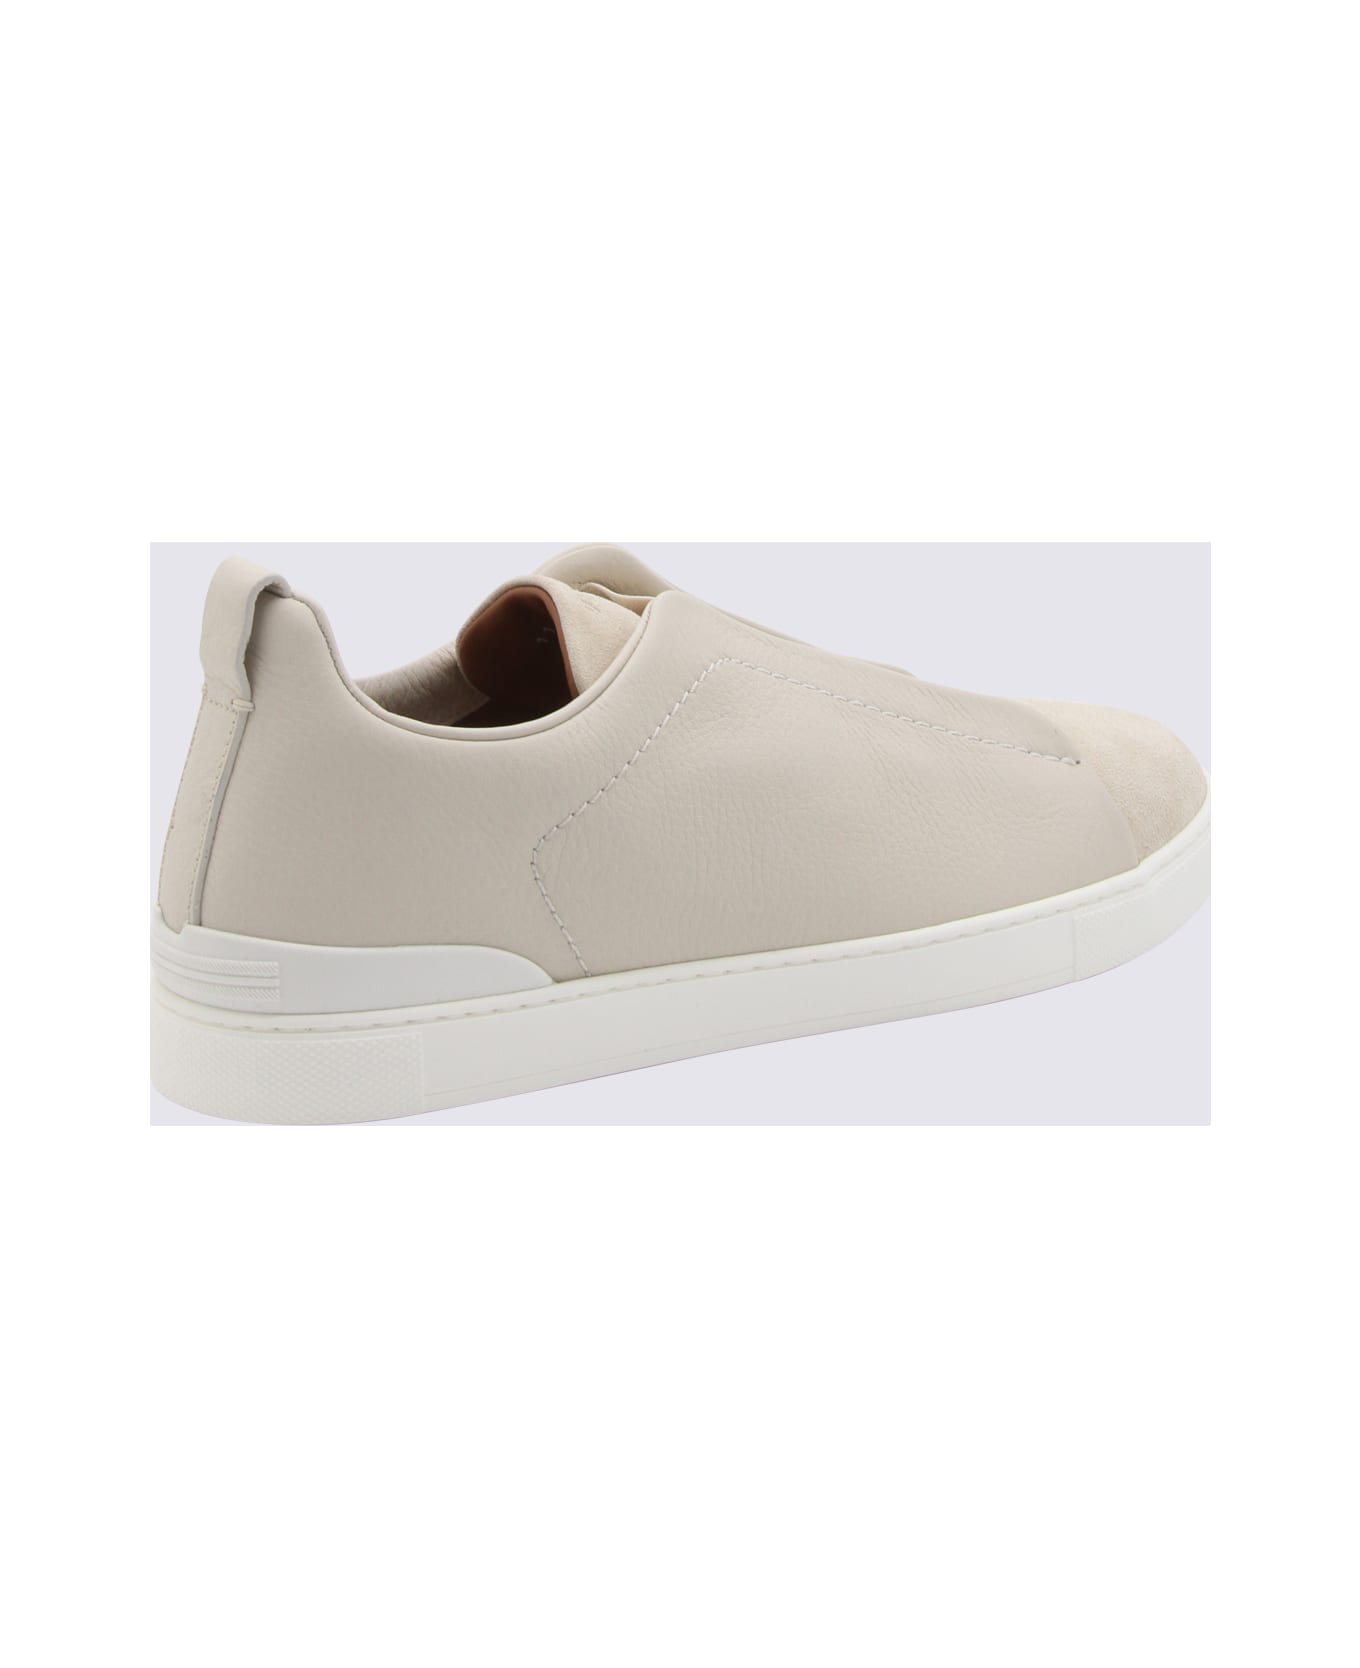 Zegna White Leather Sneakers - White